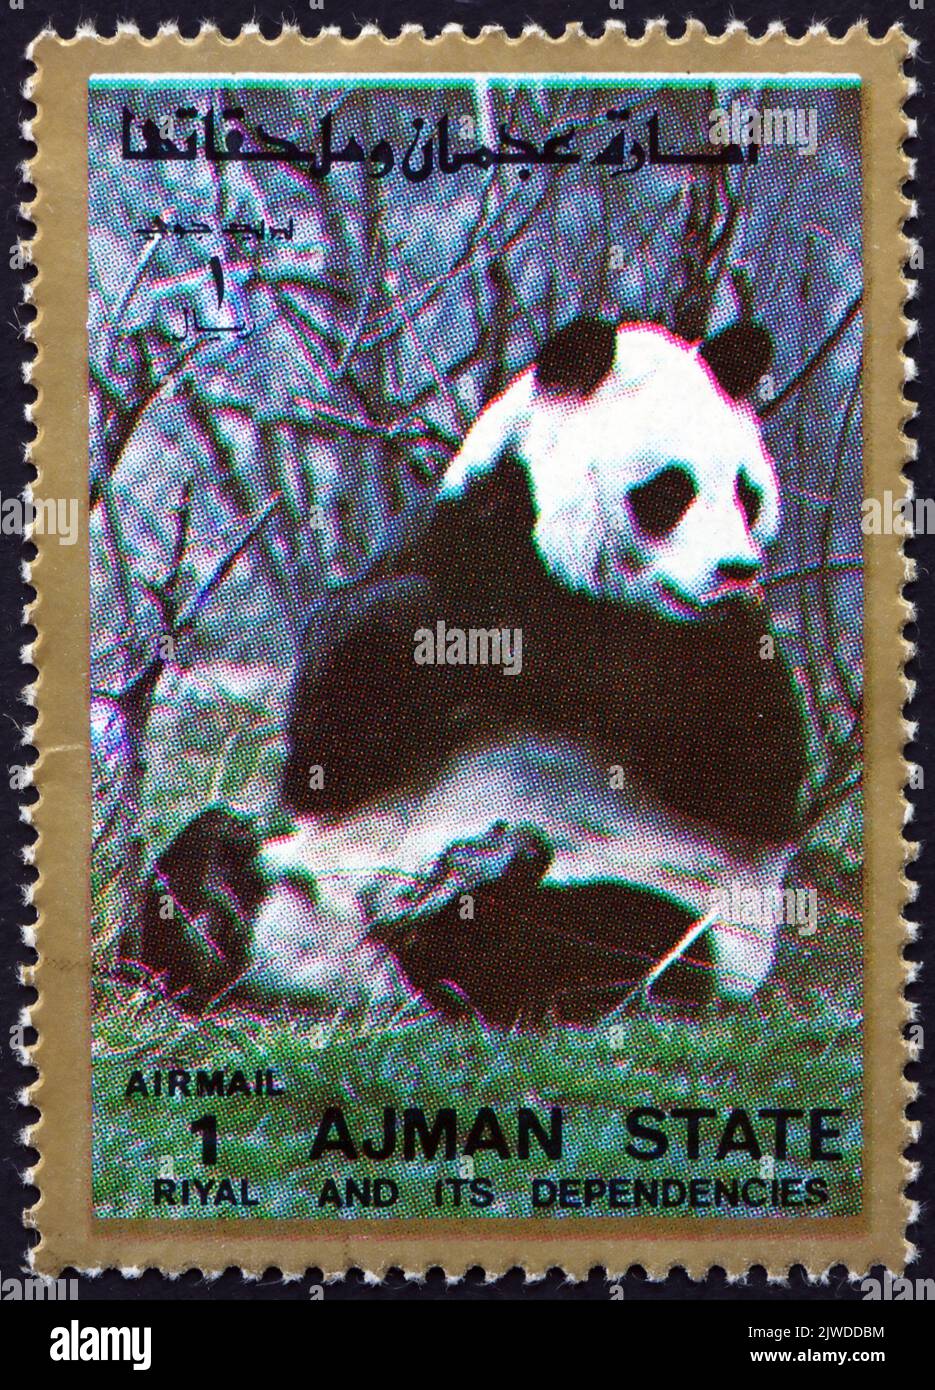 AJMAN - CIRCA 1973: a stamp printed in Ajman shows giant panda, ailuropoda melanoleuca, is a bear species endemic to China, circa 1973 Stock Photo